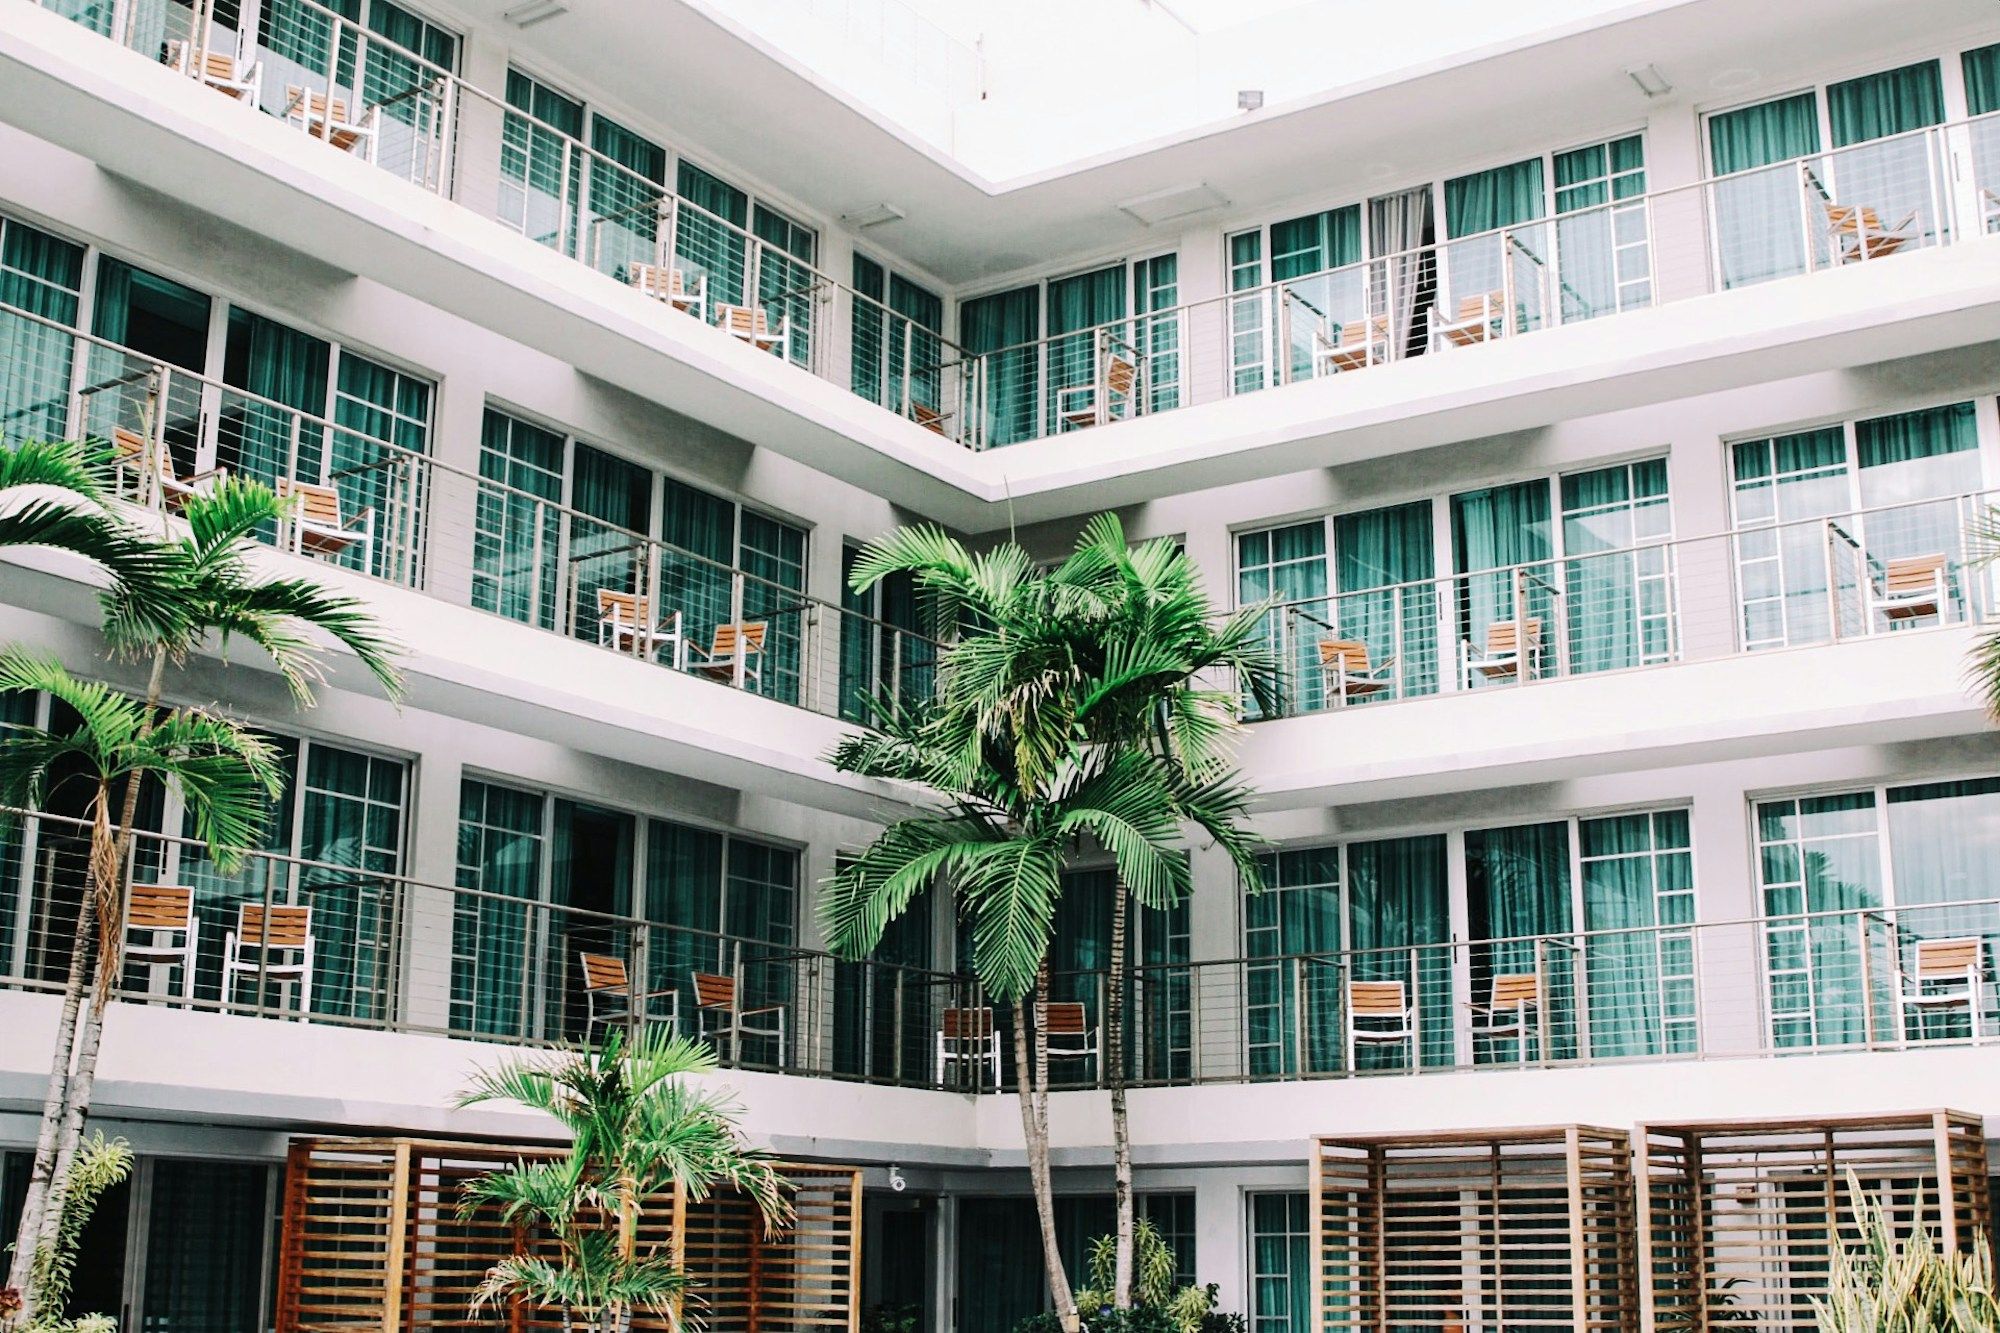 coconut-palm-trees-in-hotel-lobby-_dS27XGgRyQ.jpg